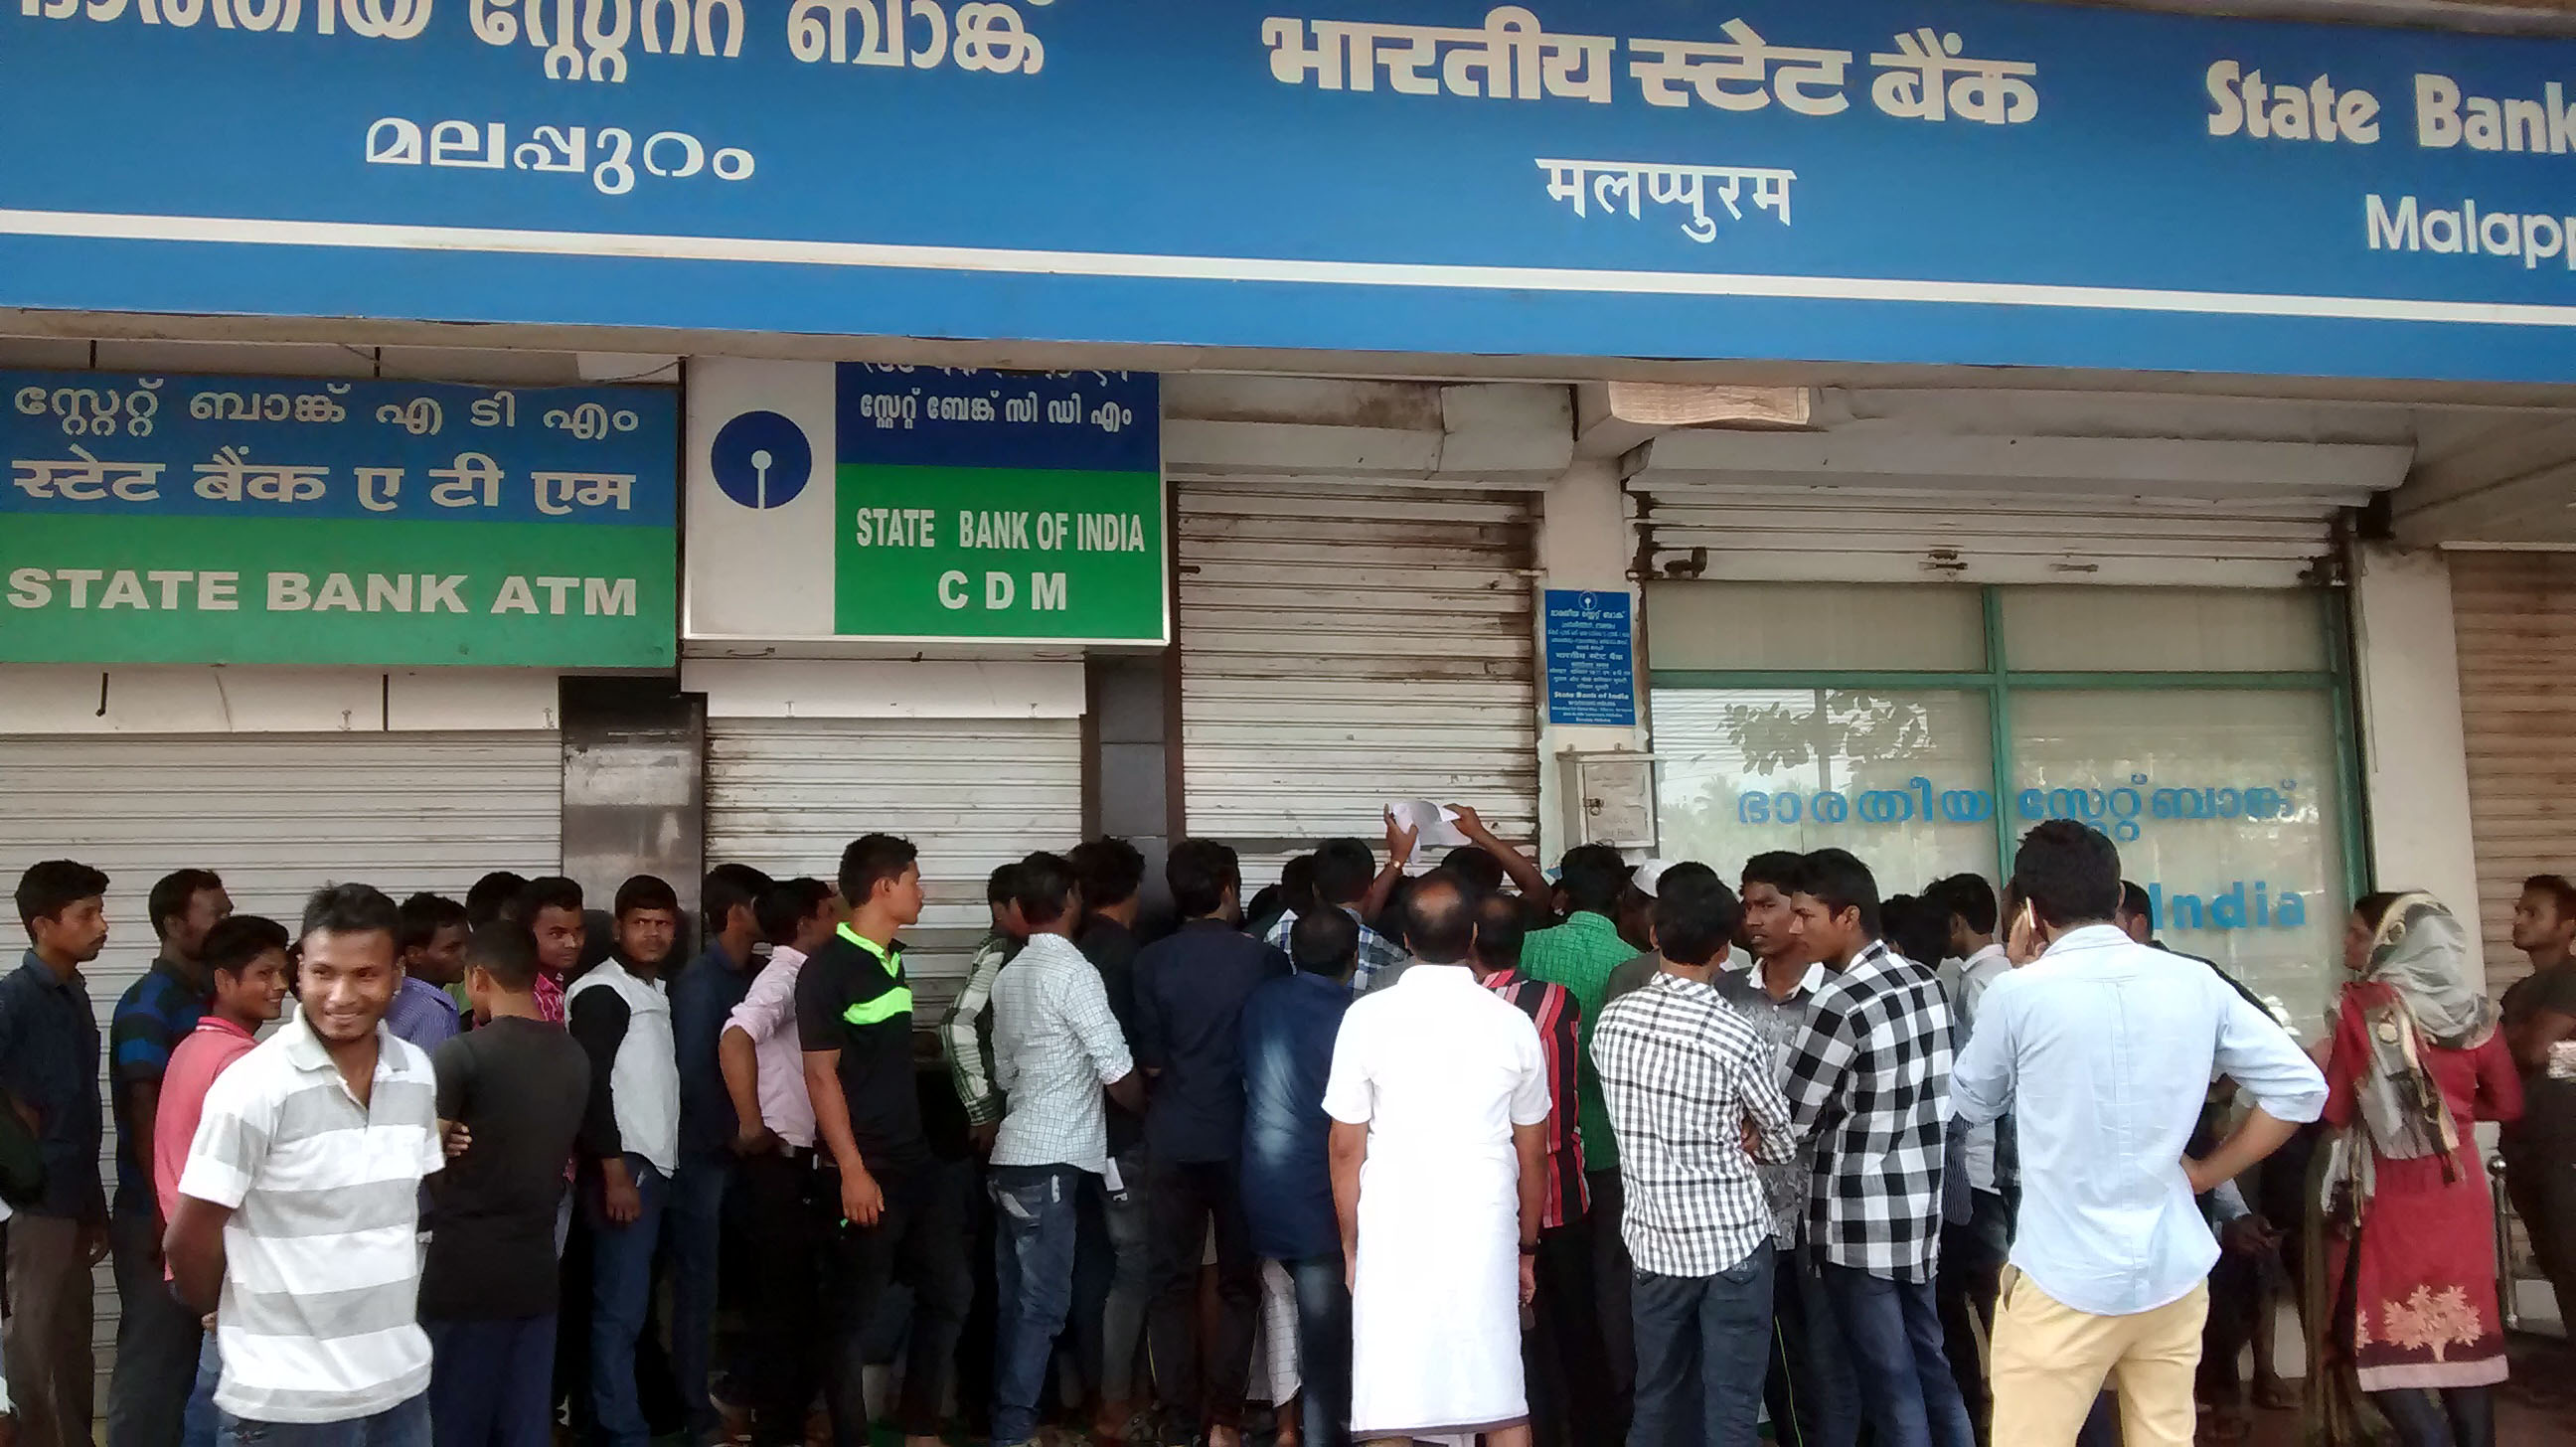 Bank strike hits services in Kolkata, several ATMs stay shut